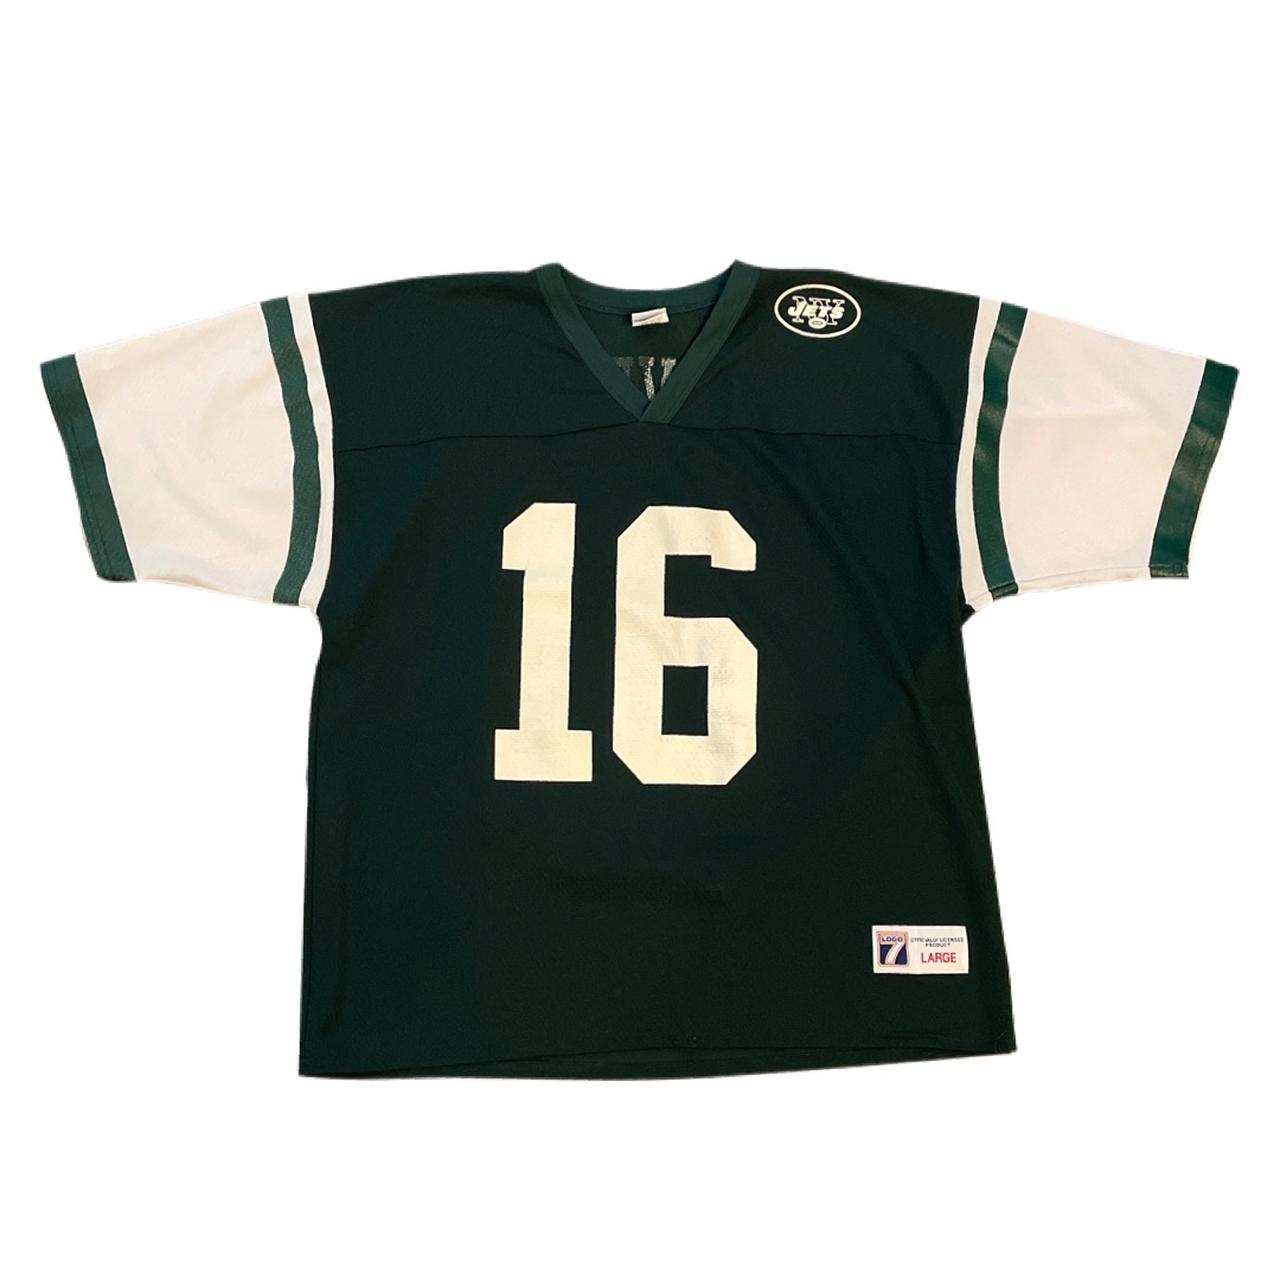 Product Image 1 - Vintage NY Jets jersey. Some